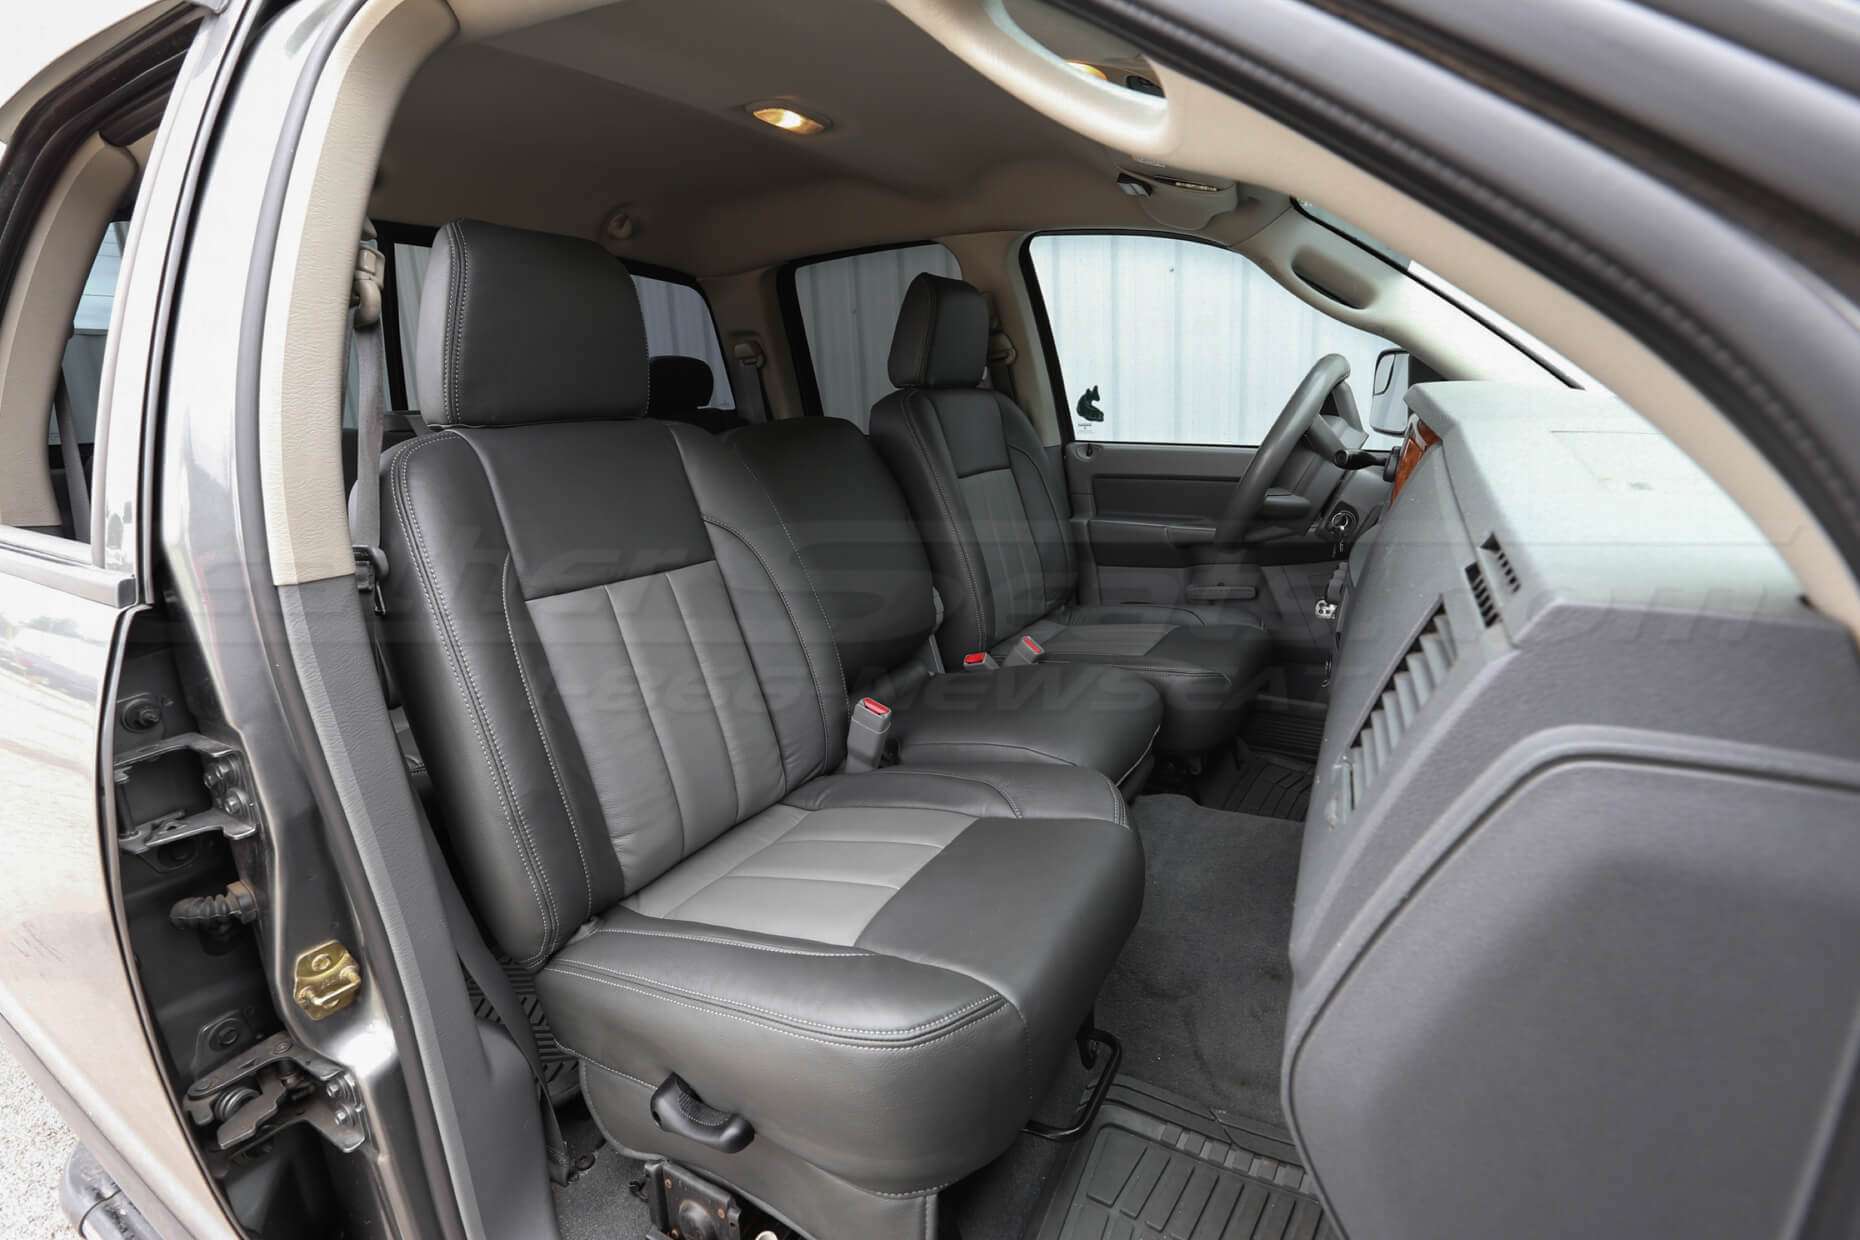 06-08 Dodge Ram- Two-Tone Graphite w/ Light Grey - Front passenger interior